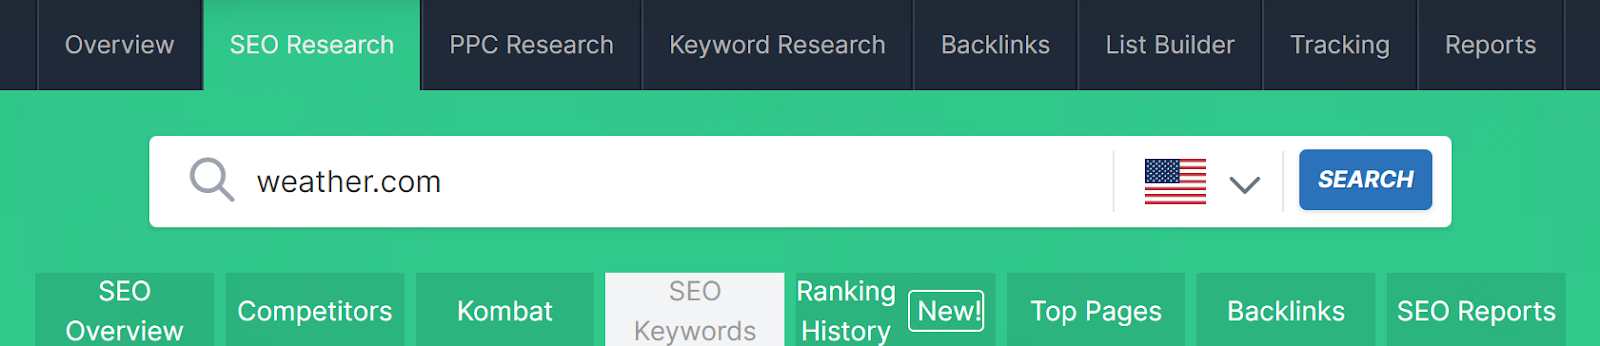 spyfu seo keyword insights tool